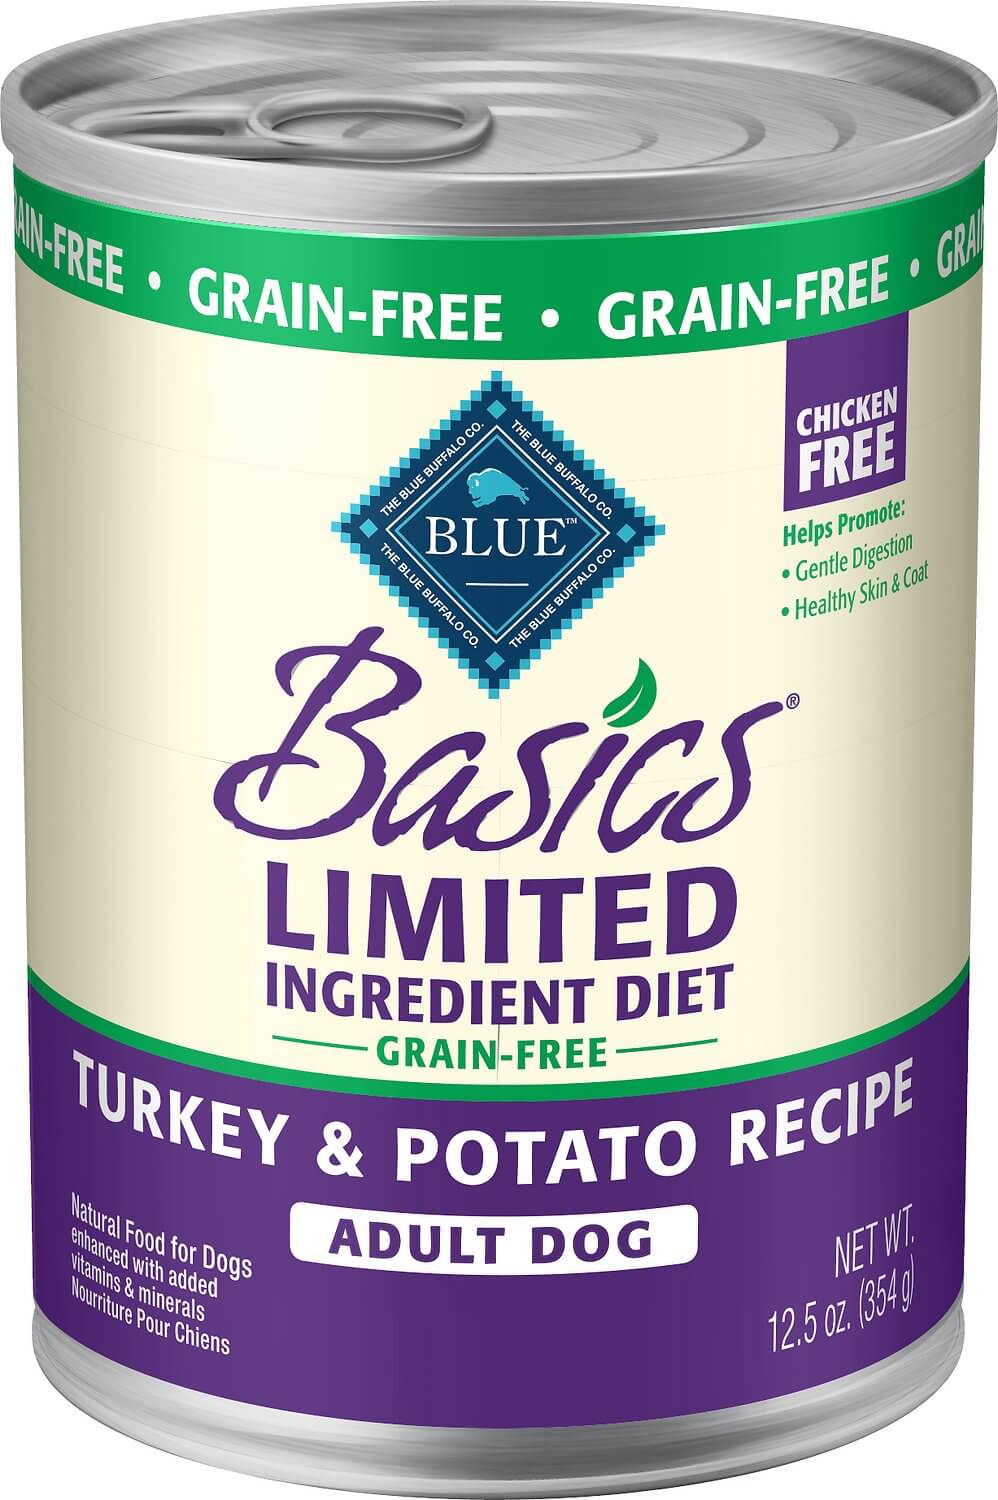 Blue Buffalo Basics Grain Free Dog Food Review (Canned)